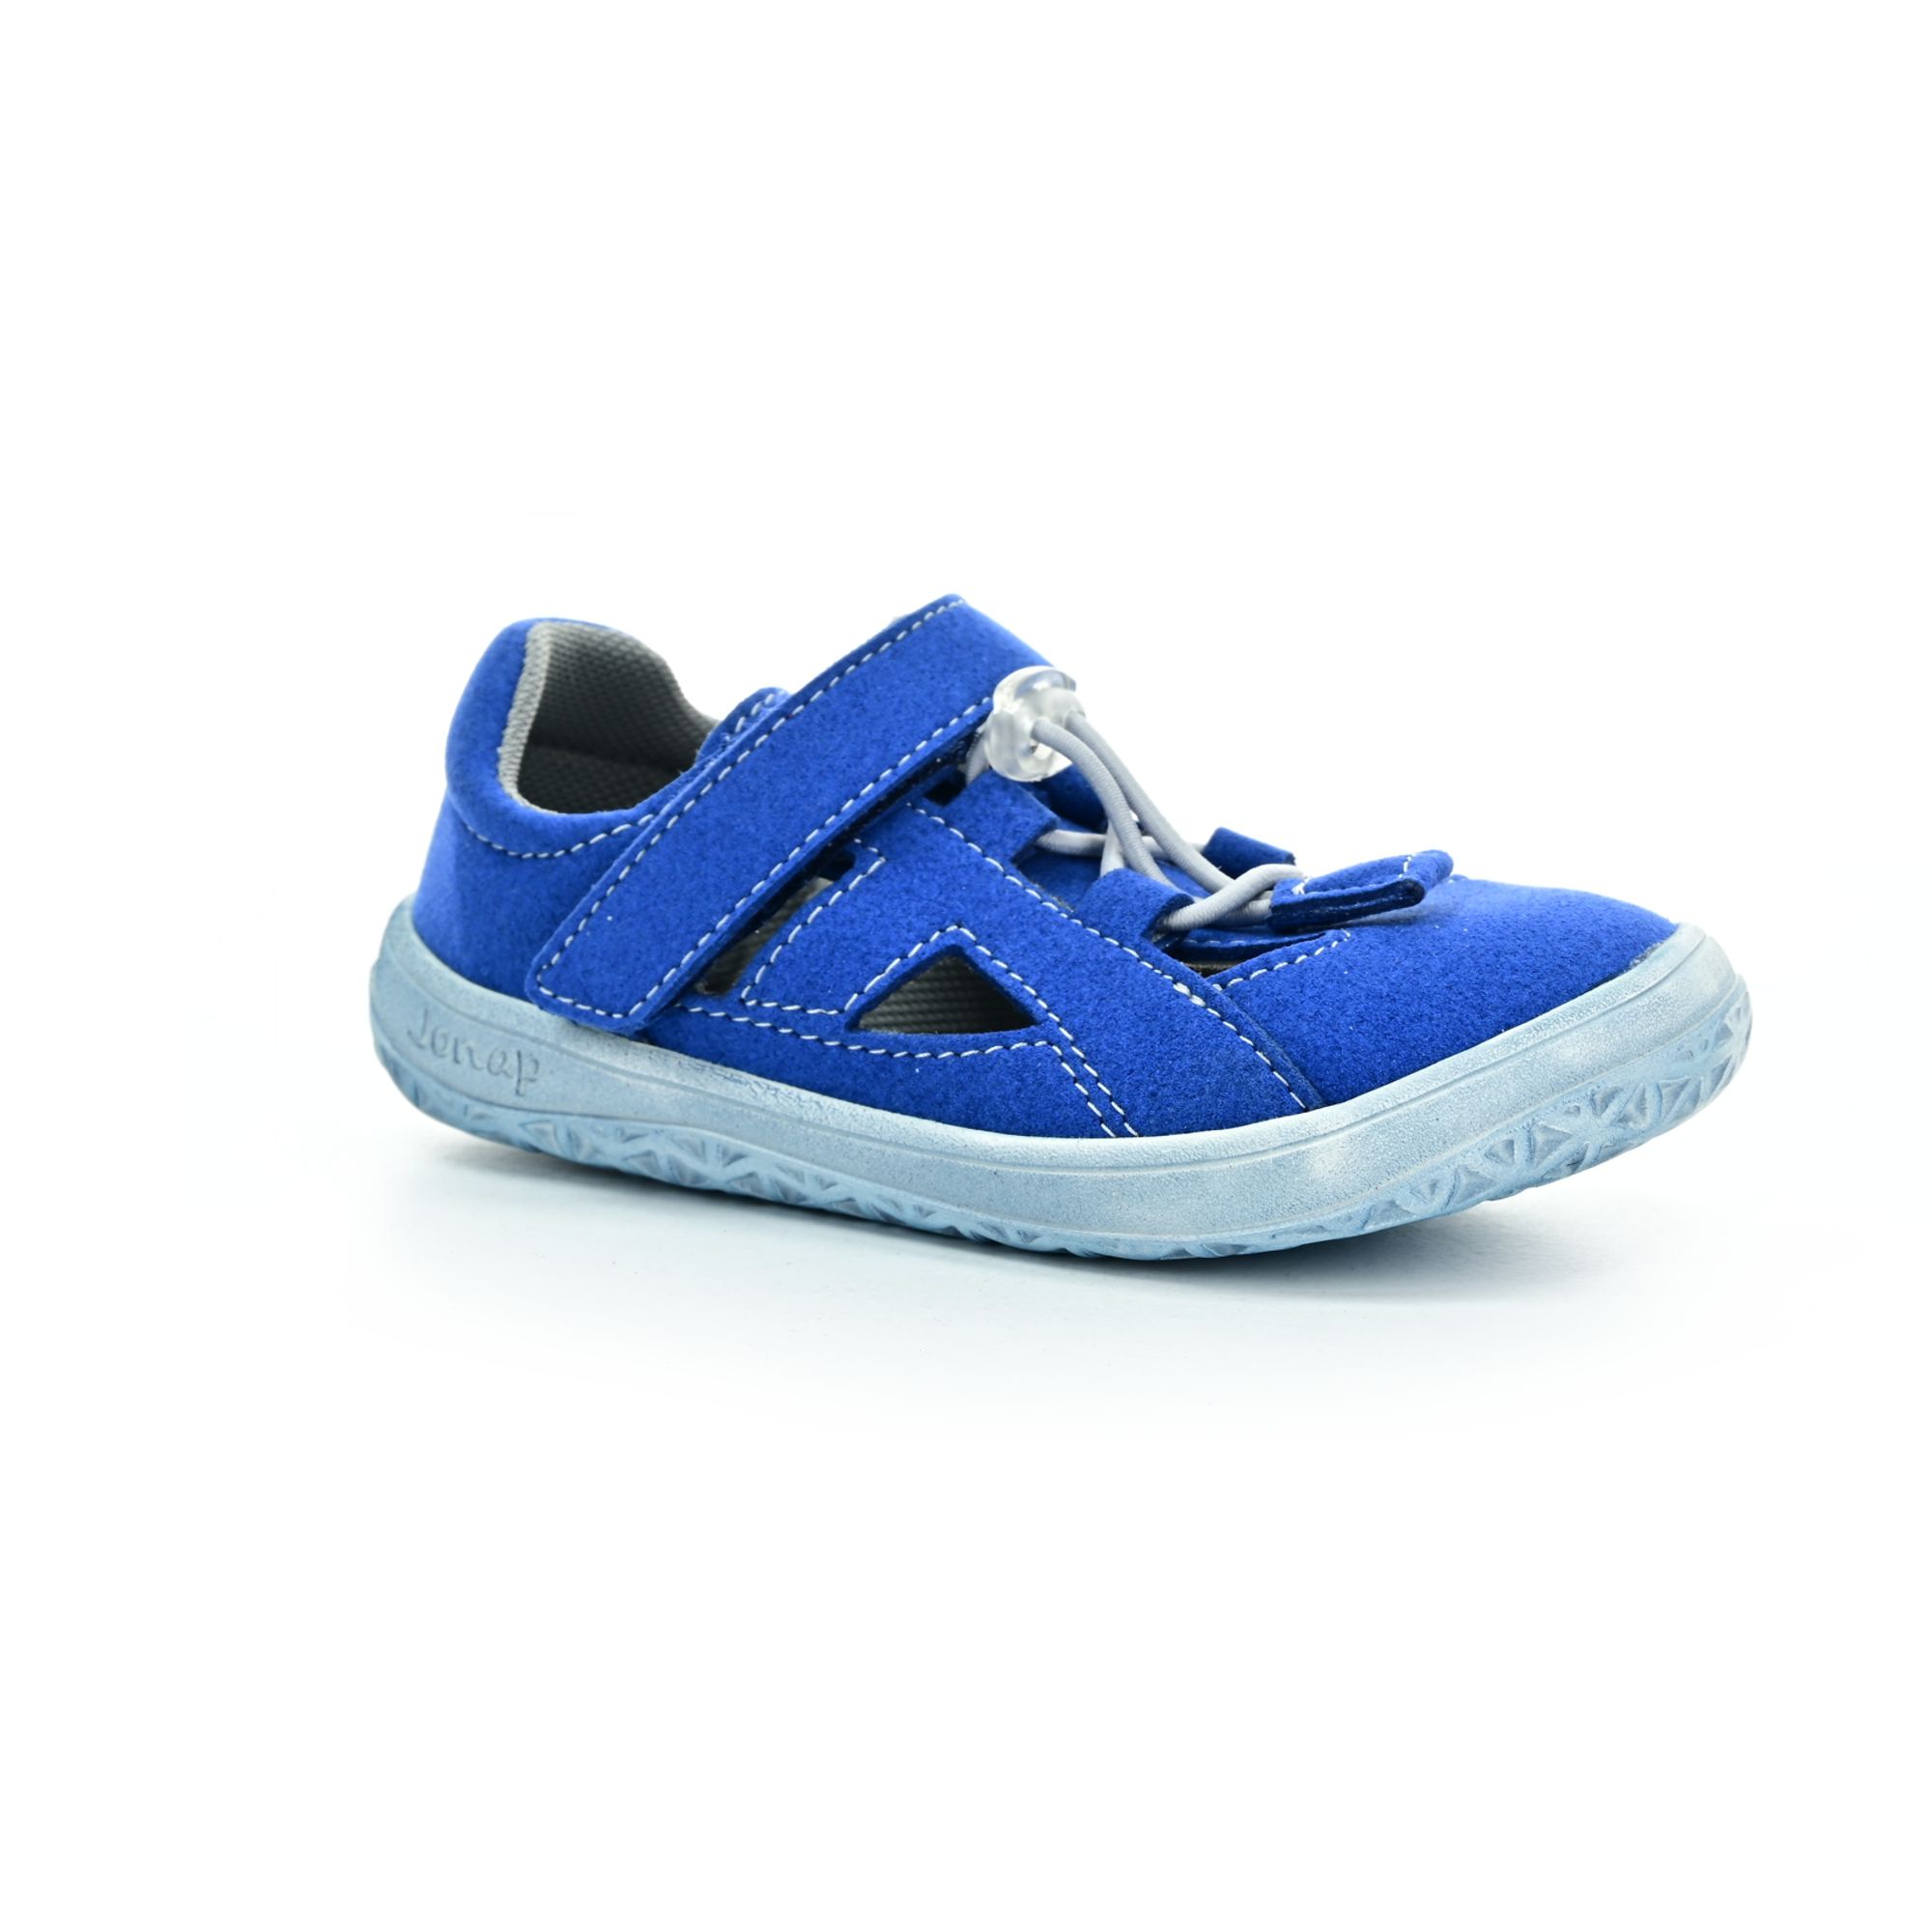 Jonap B9 MF modrá ming barefoot sandále 29 EUR